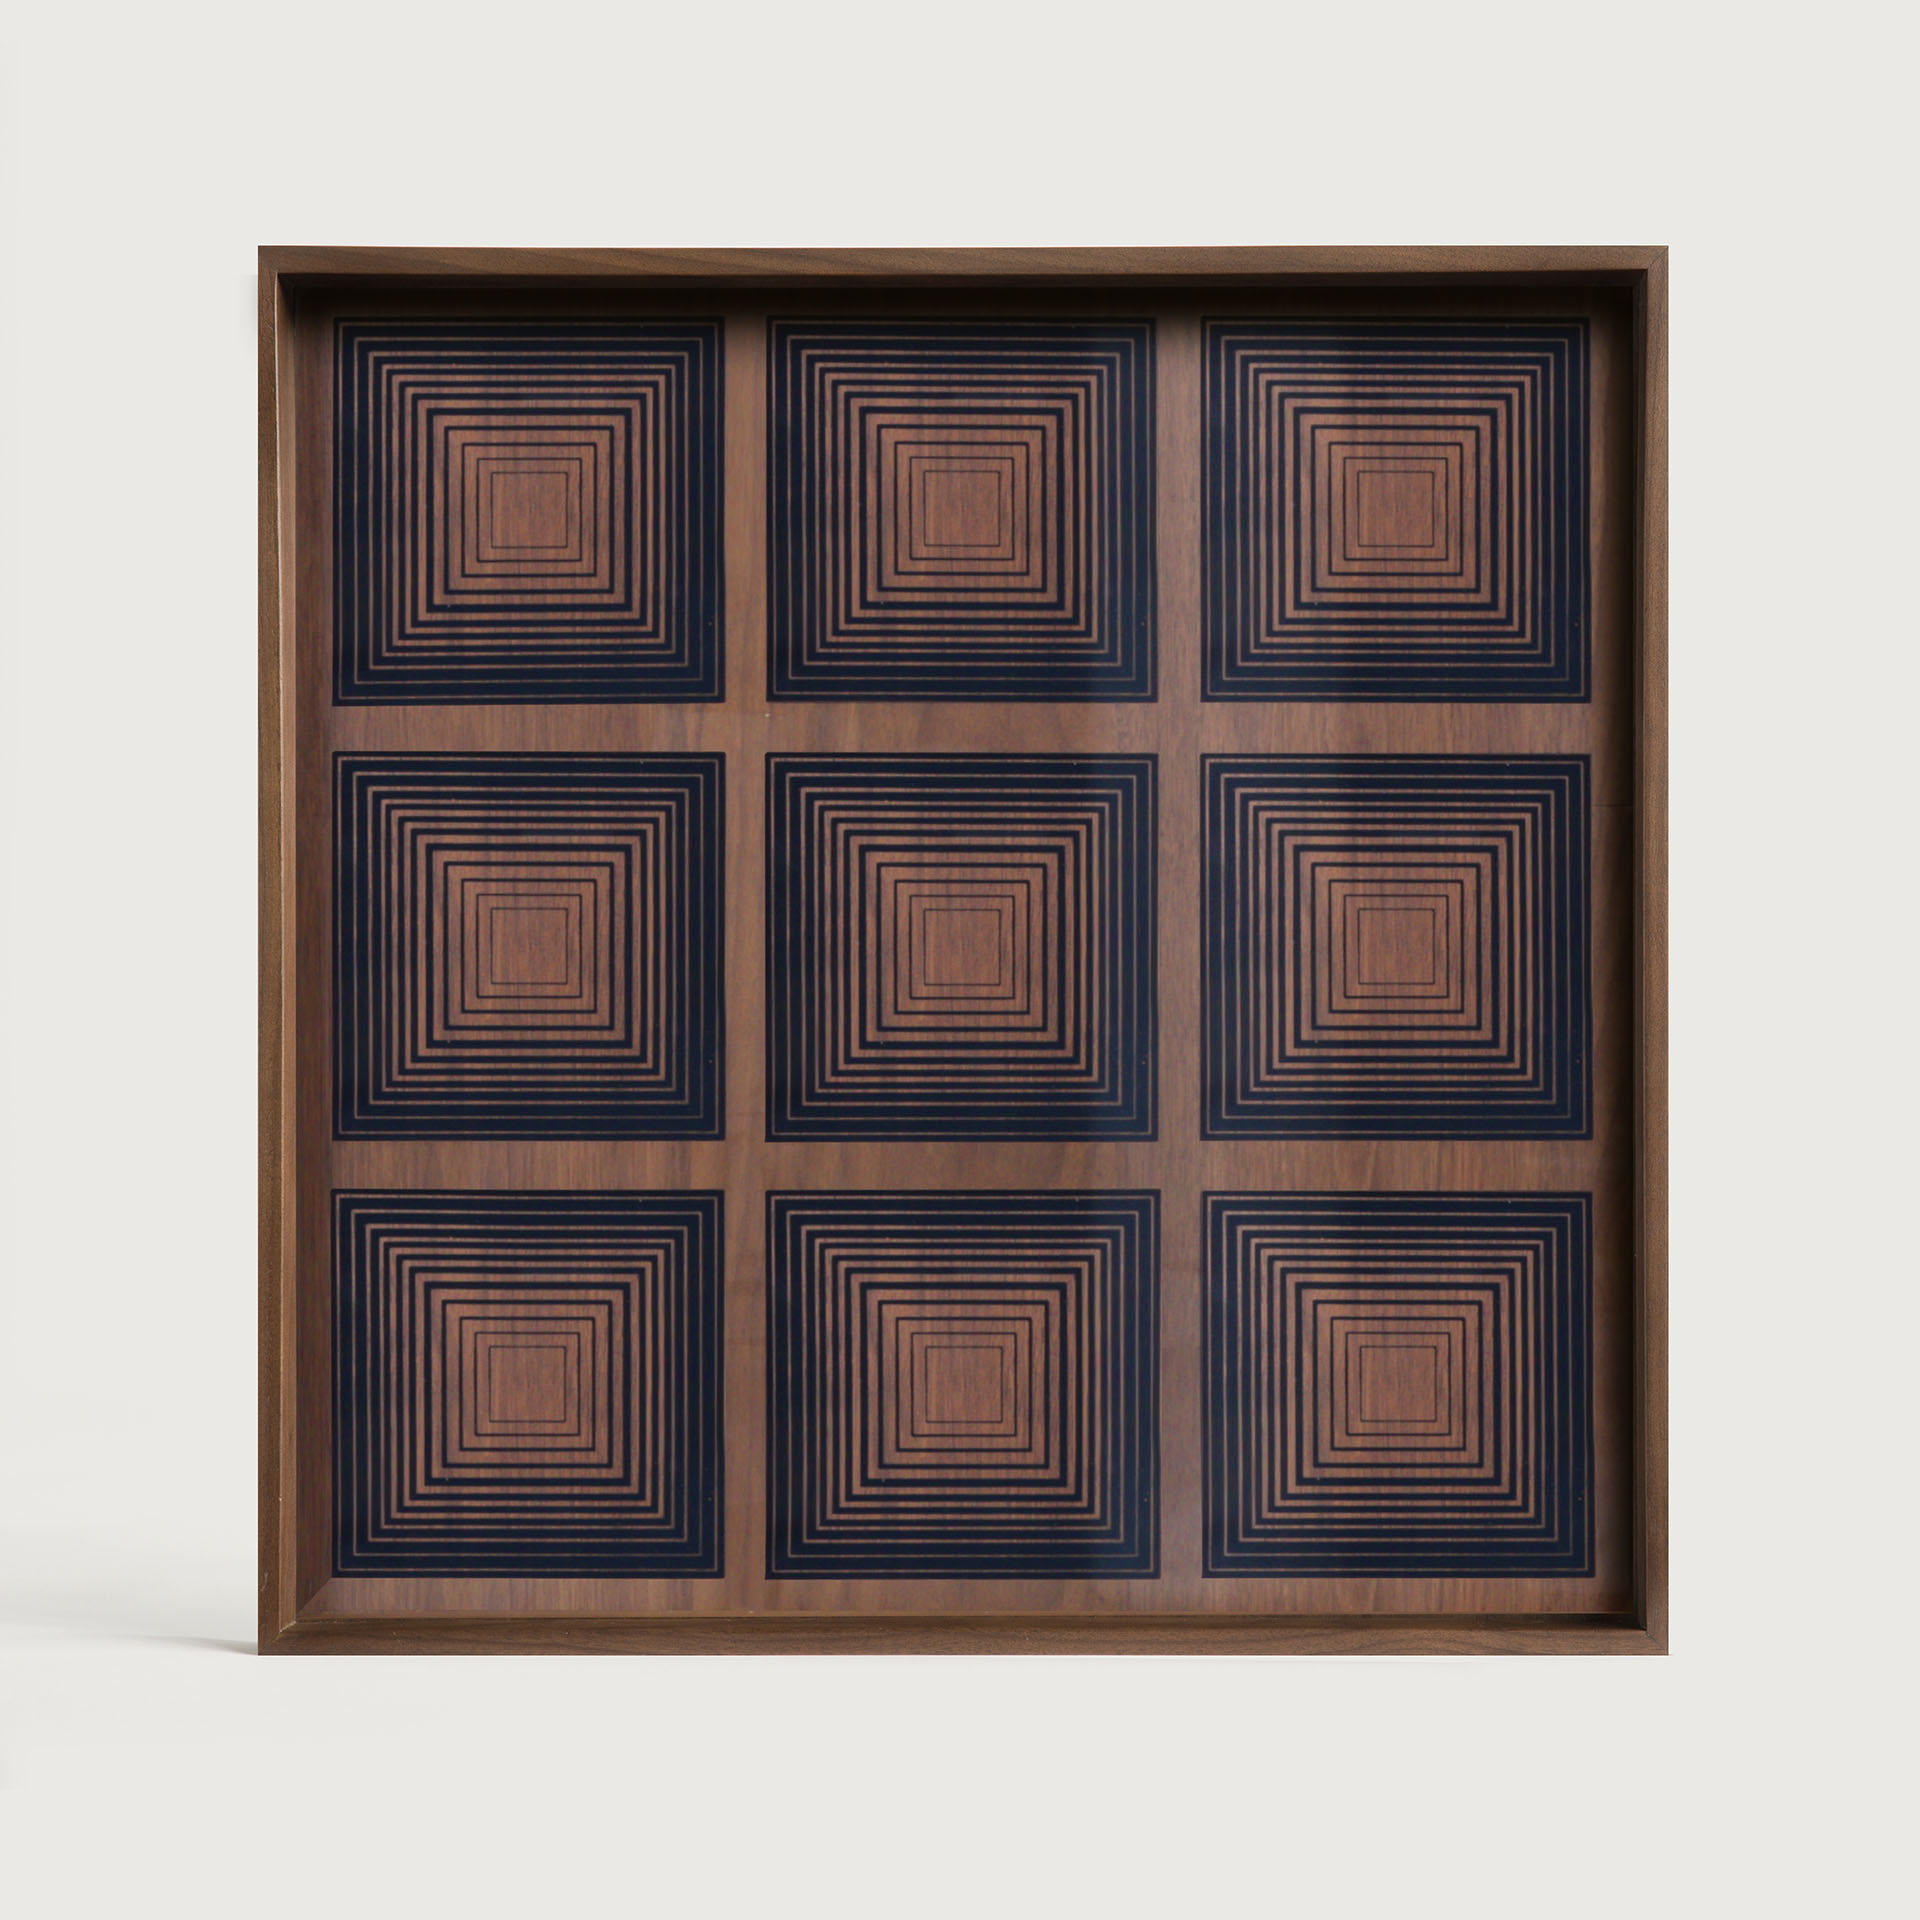 [20920*] Ink Squares glass tray (51x51x4cm)